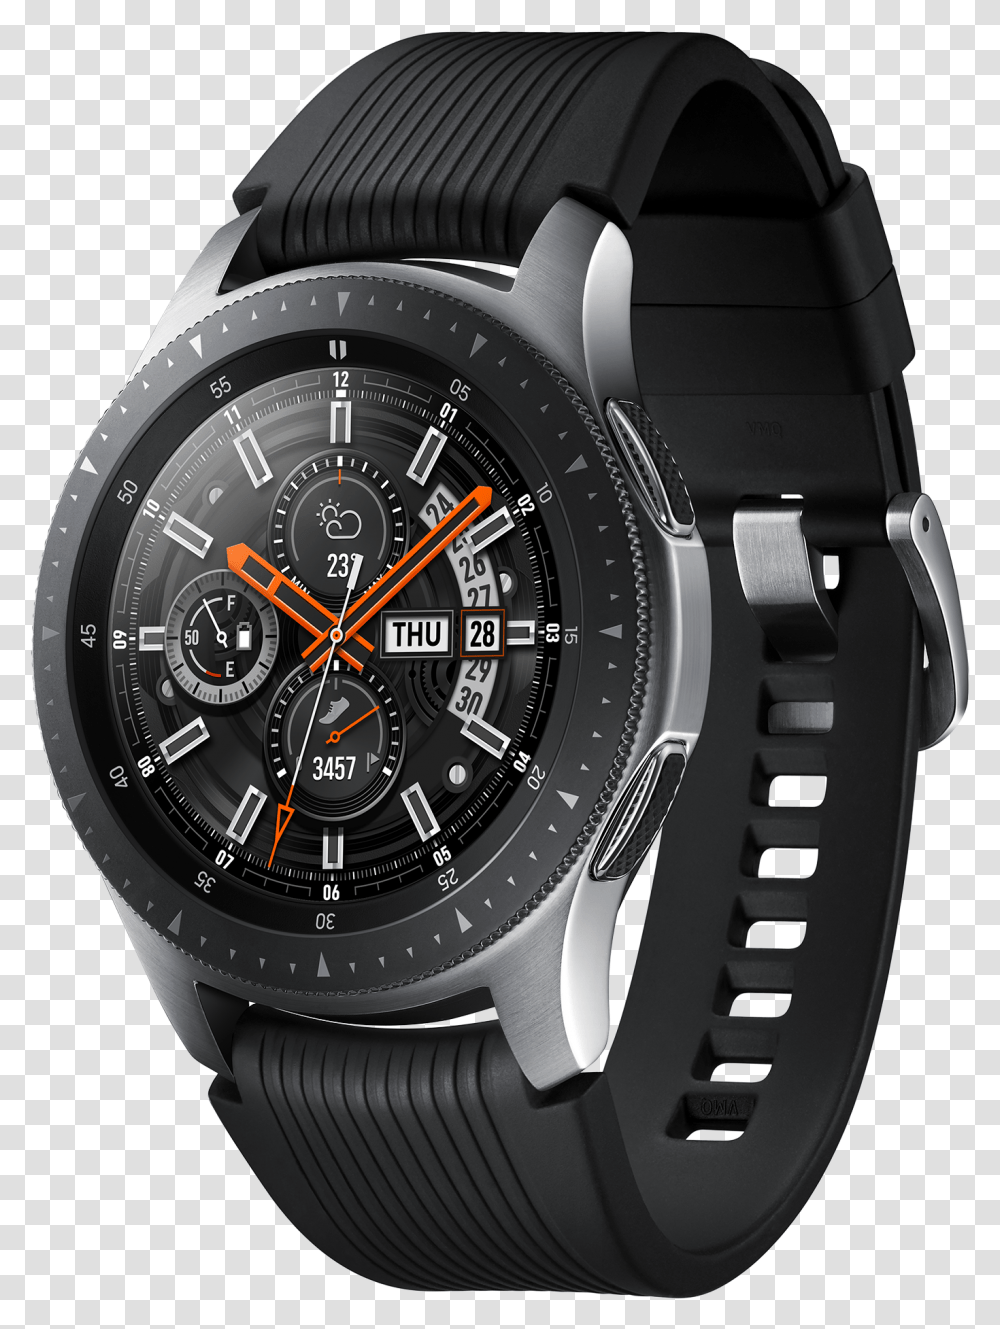 Samsung Galaxy Watch 4g Image Samsung Galaxy Watch Active 2 Transparent Png